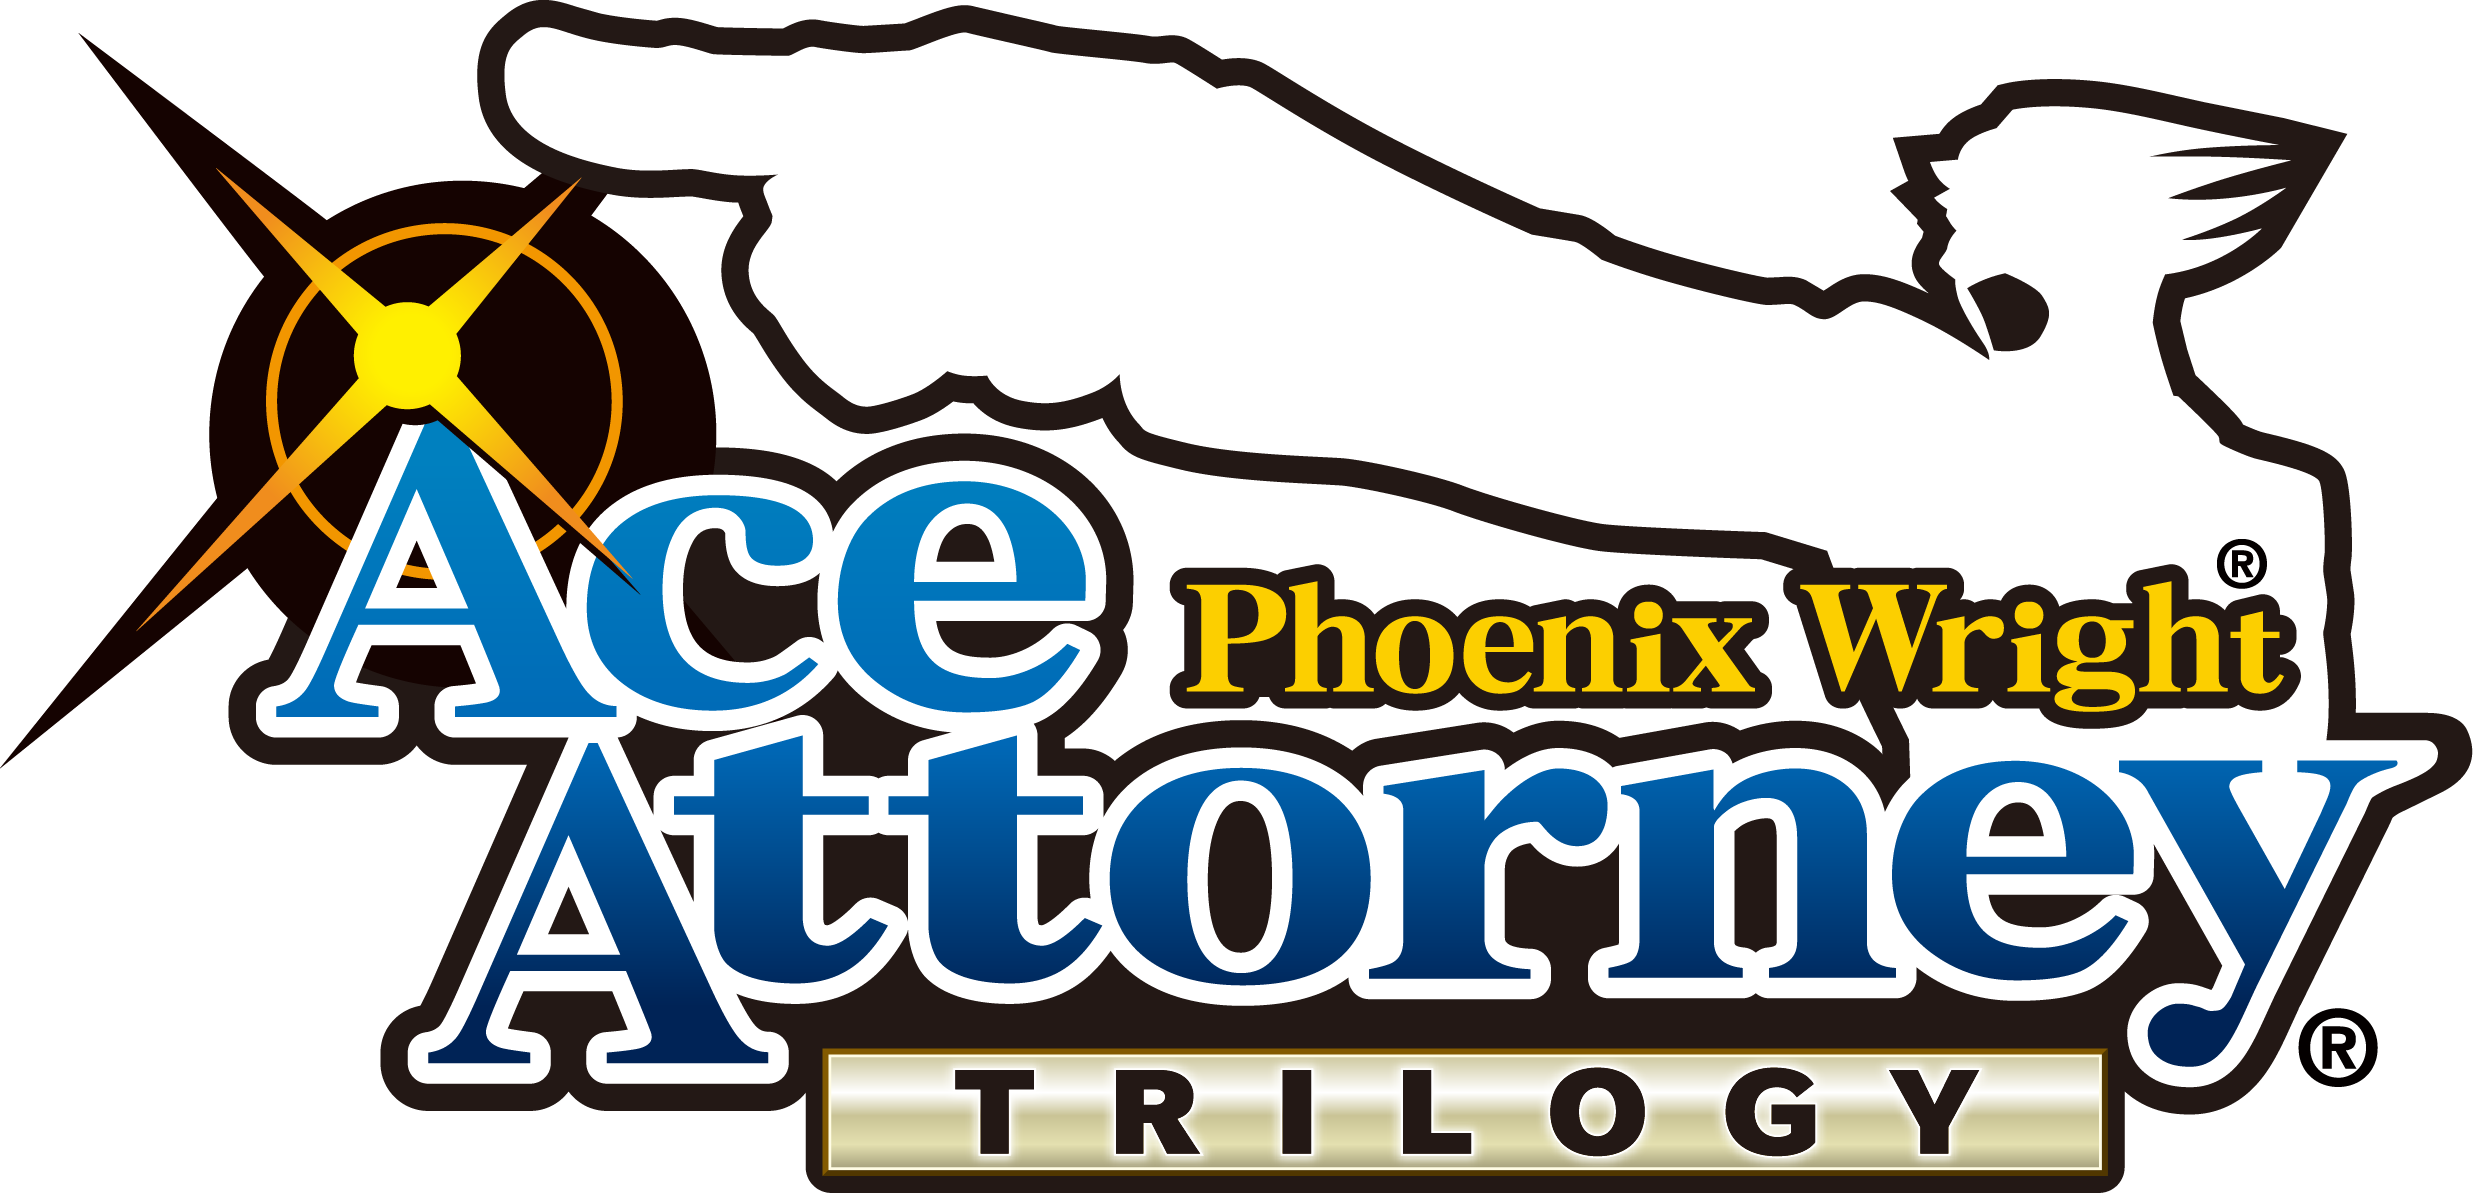 Phoenix Wright: Ace Attorney Trilogy, Ace Attorney Wiki